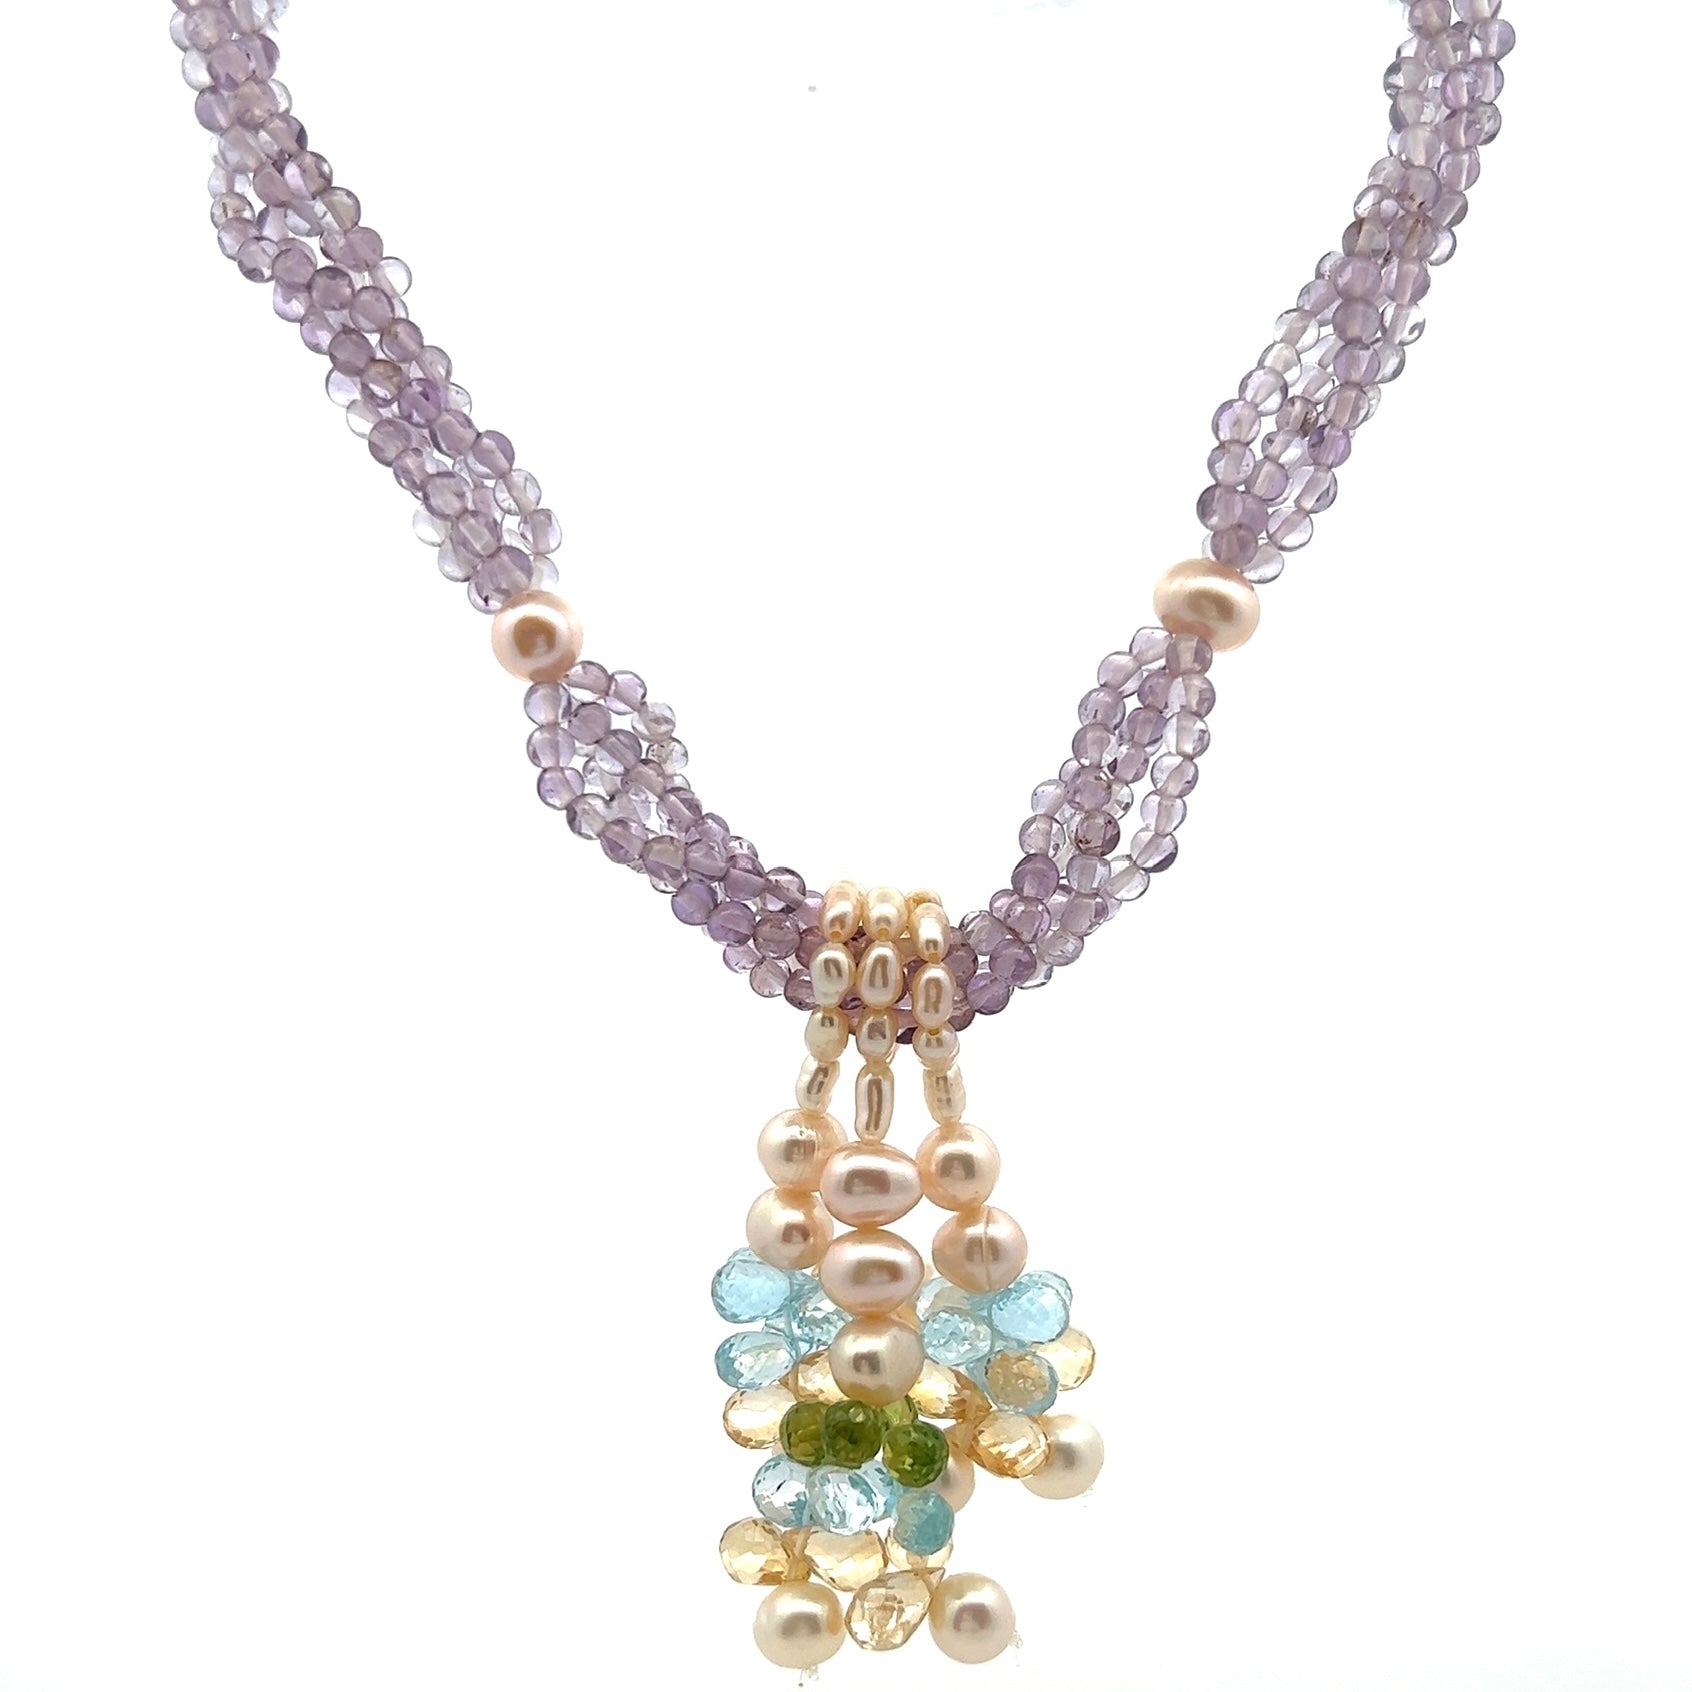 Natural Handmade Necklace 16"-18" Amethyst, Peridot, Citrine, Pearls Gemstone Beads Jewelry